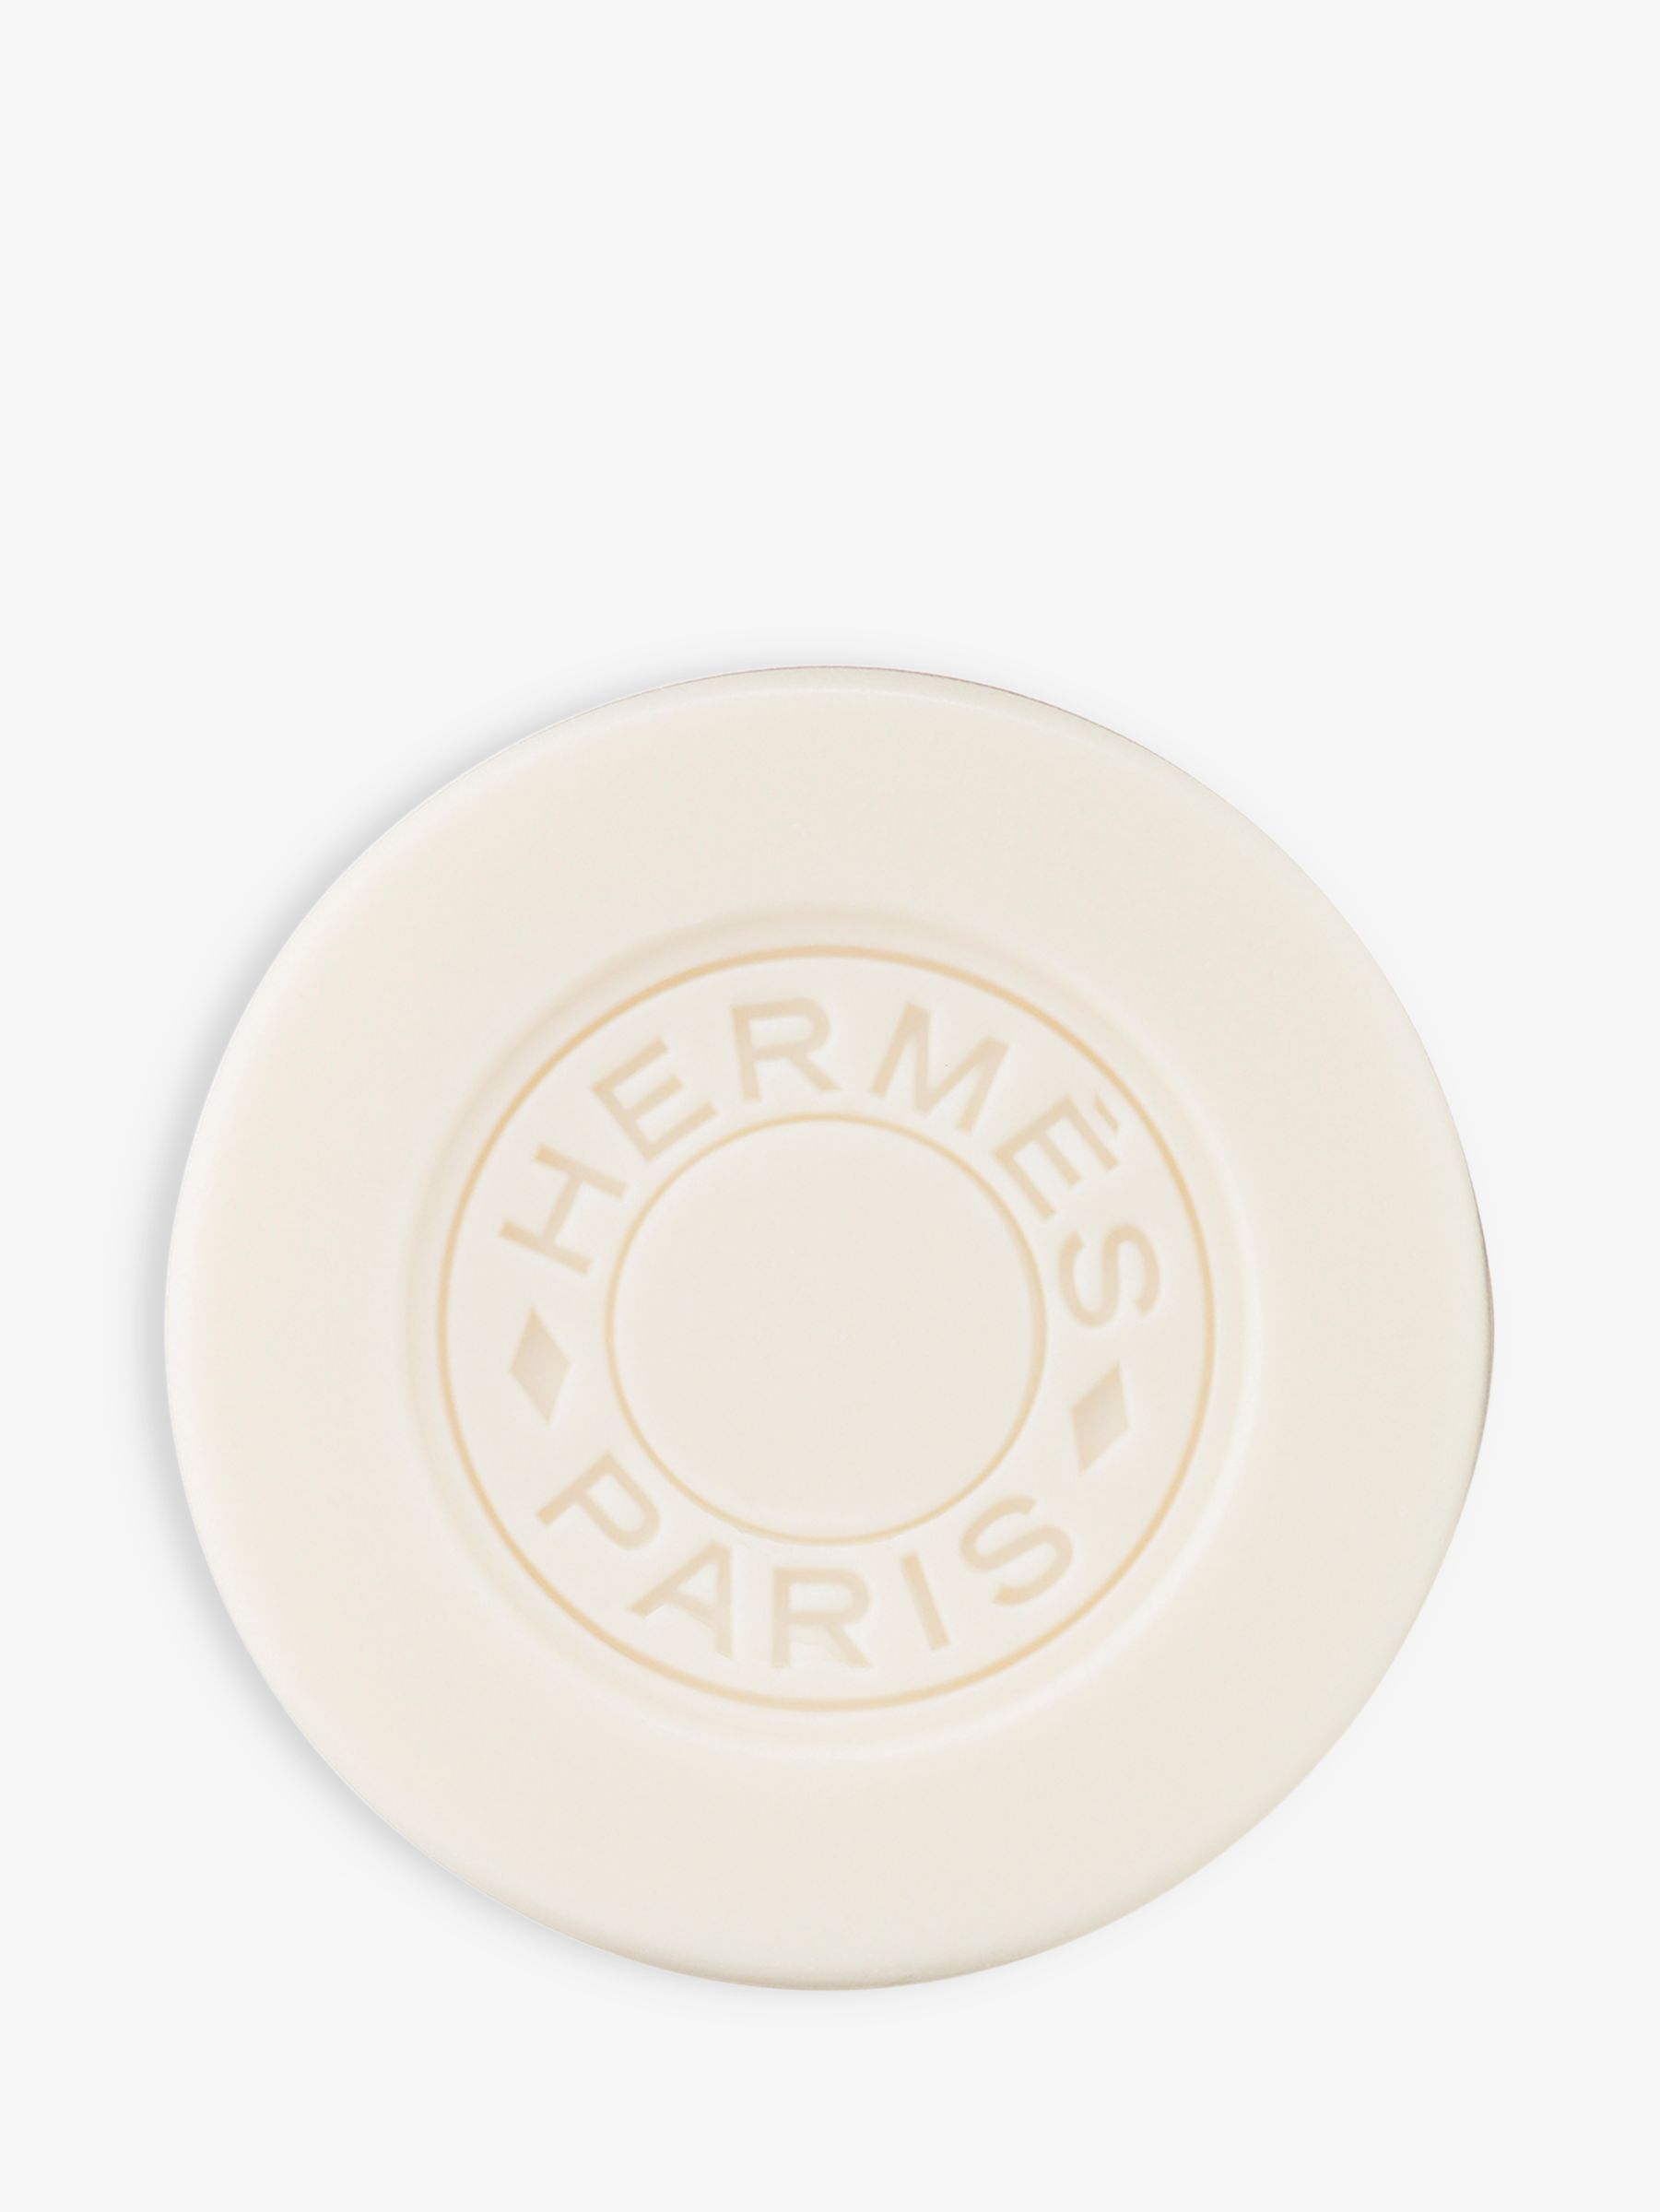 Hermès Twilly d'Hermès Soap Set, 3 x 100g 3